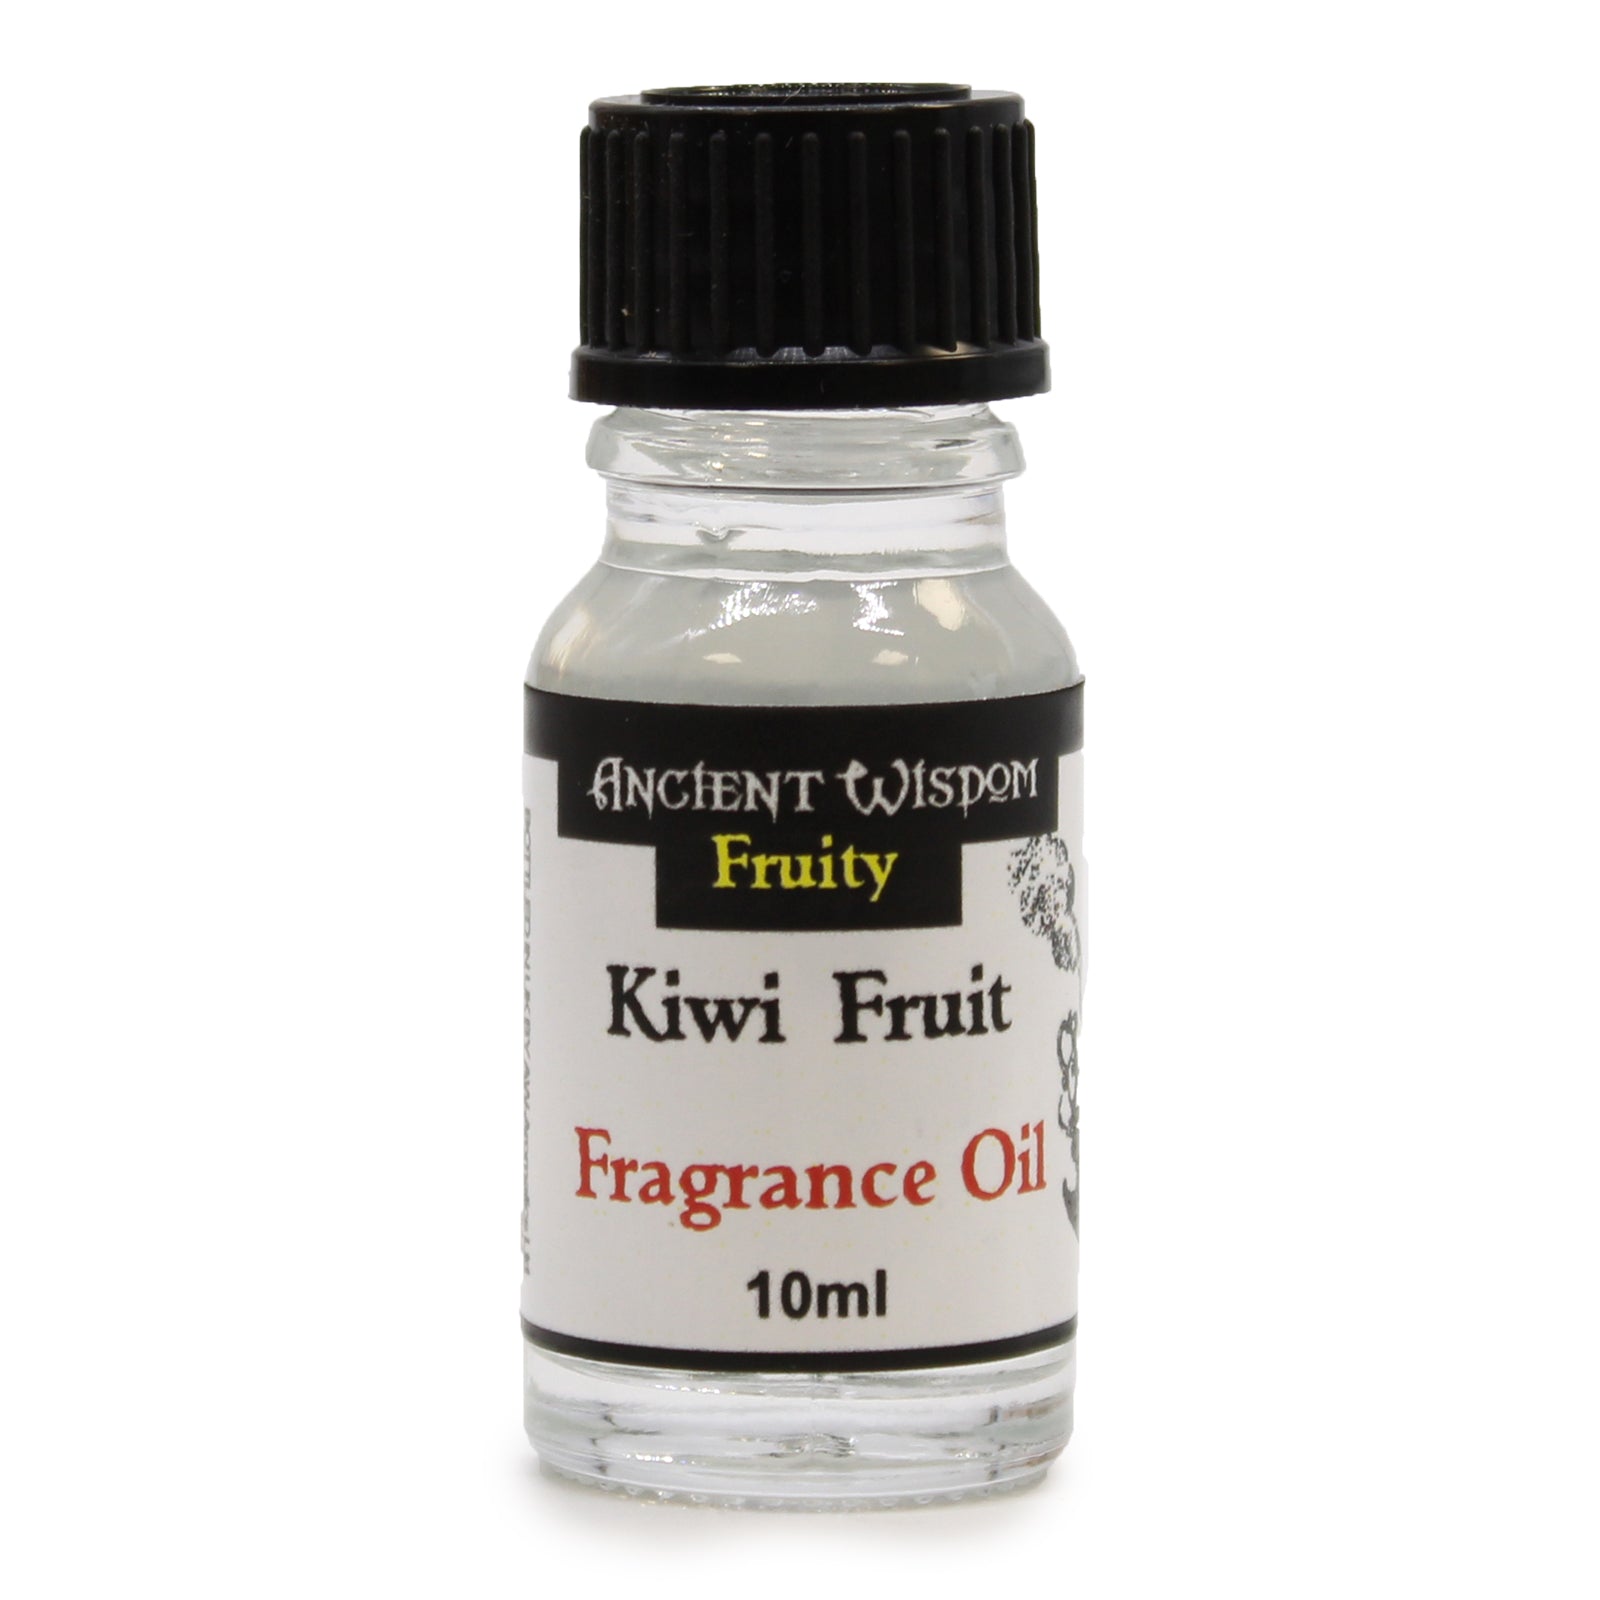 View Kiwi Fruit Fragrance Oil 10ml information